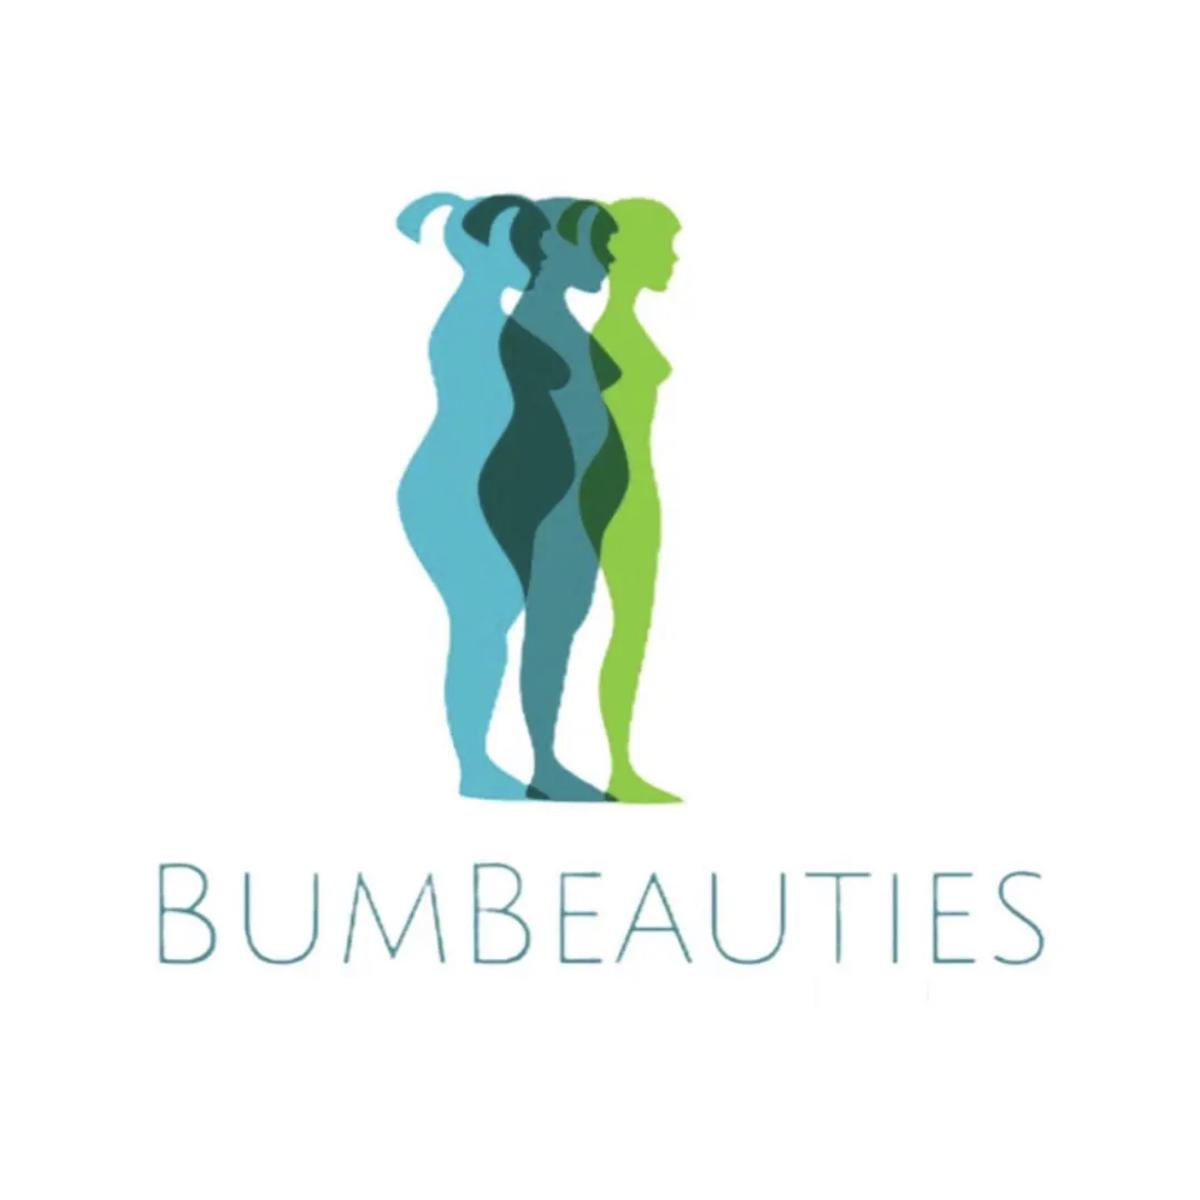 Bumbeauties LLC's images